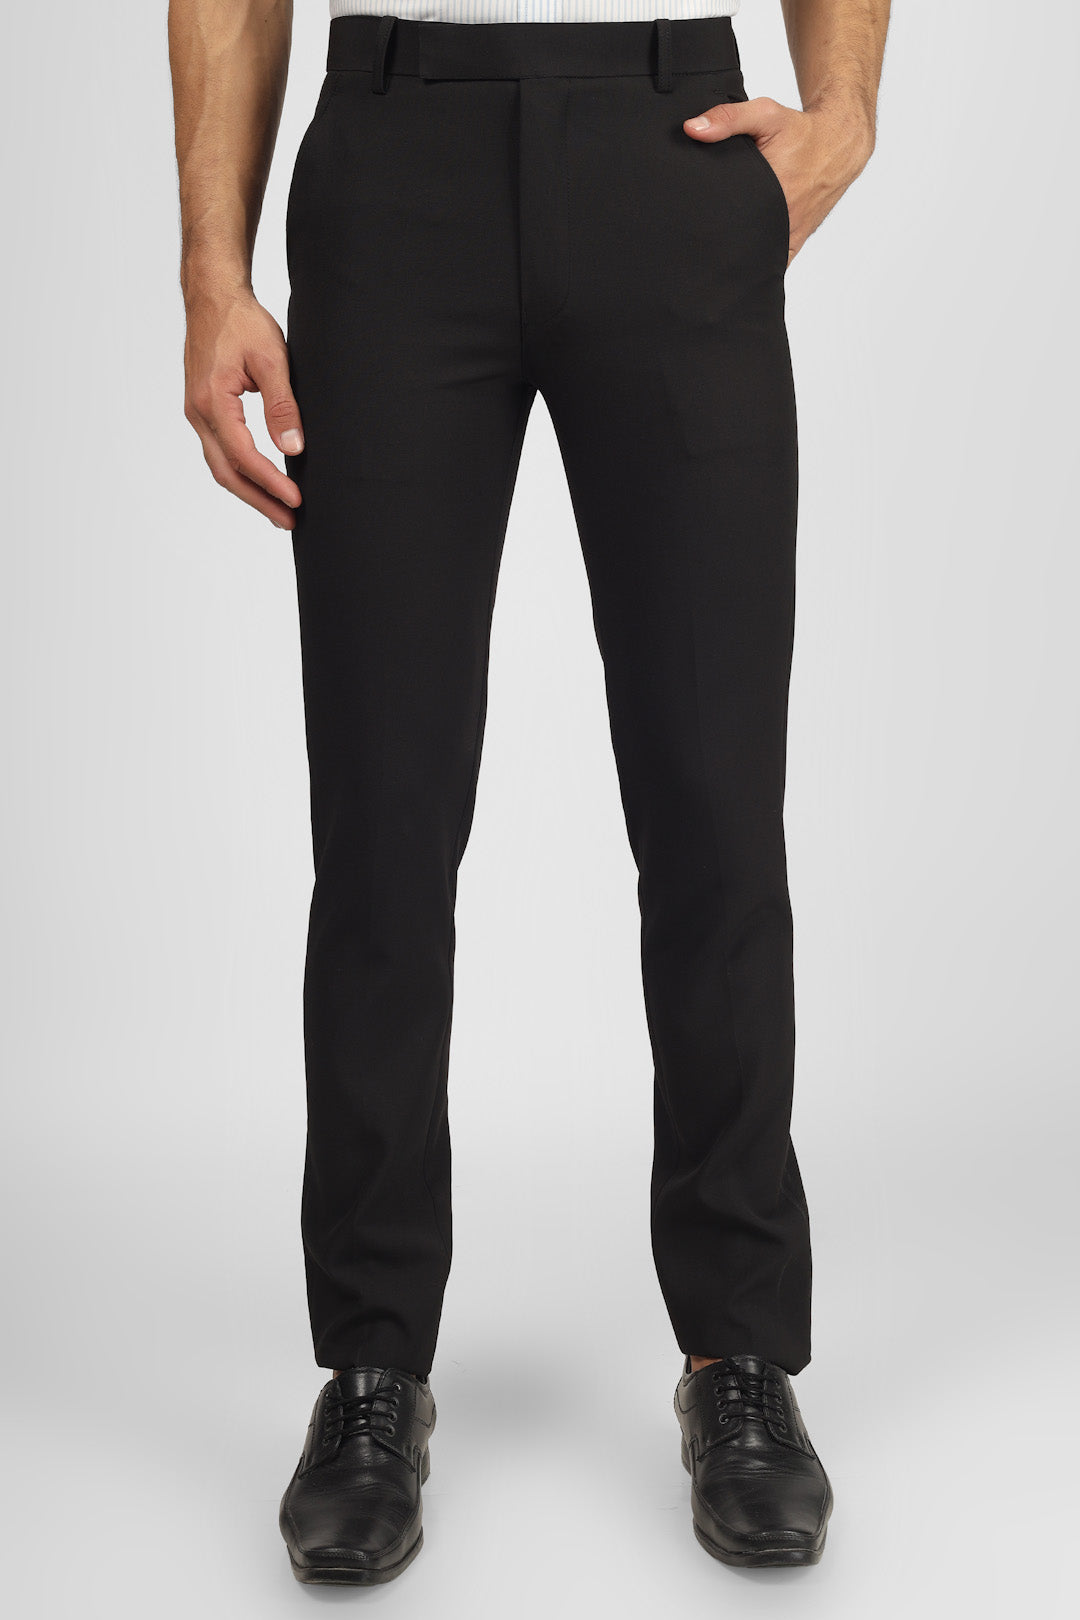 Black Lycra Formal Trousers for Men